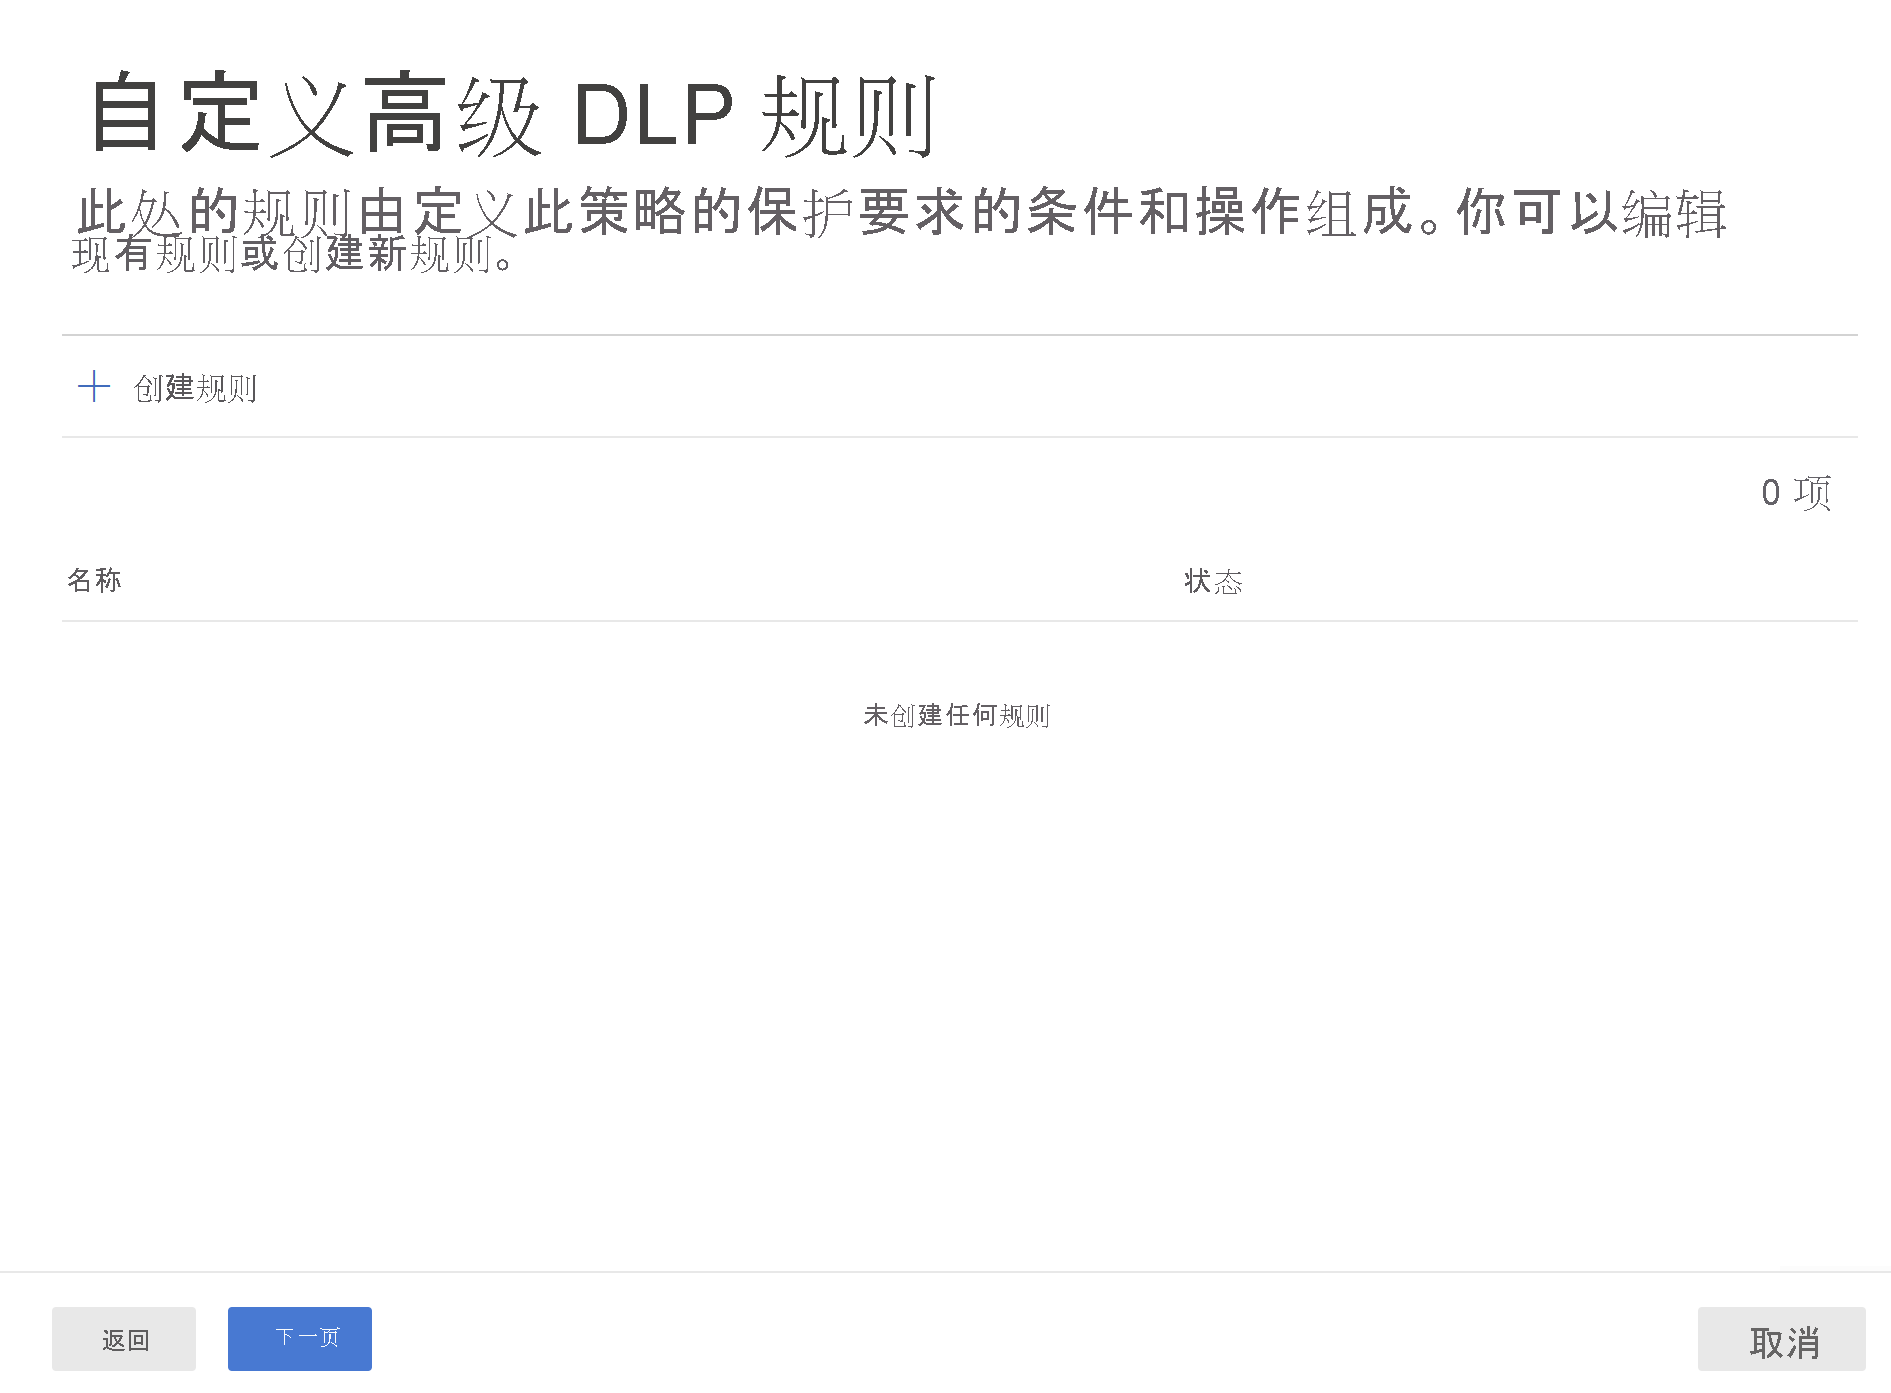 Screenshot of D L P create rule page.